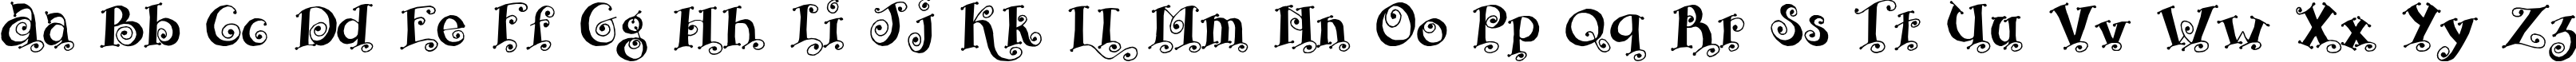 Пример написания английского алфавита шрифтом Fairy Tale